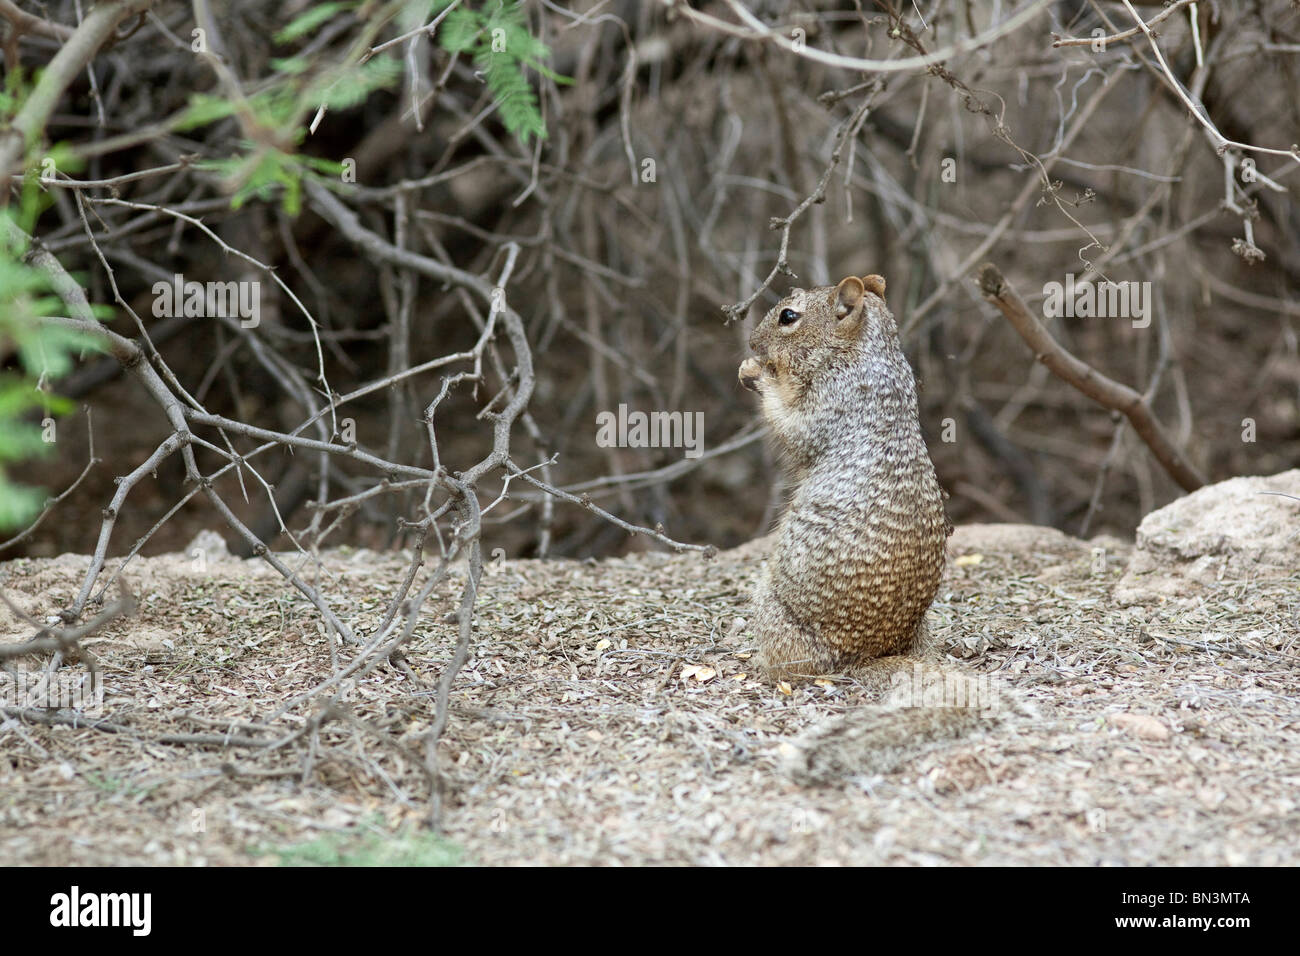 Squirrel eating, Desert Botanical Garden, Phoenix, Arizona, USA Stock Photo